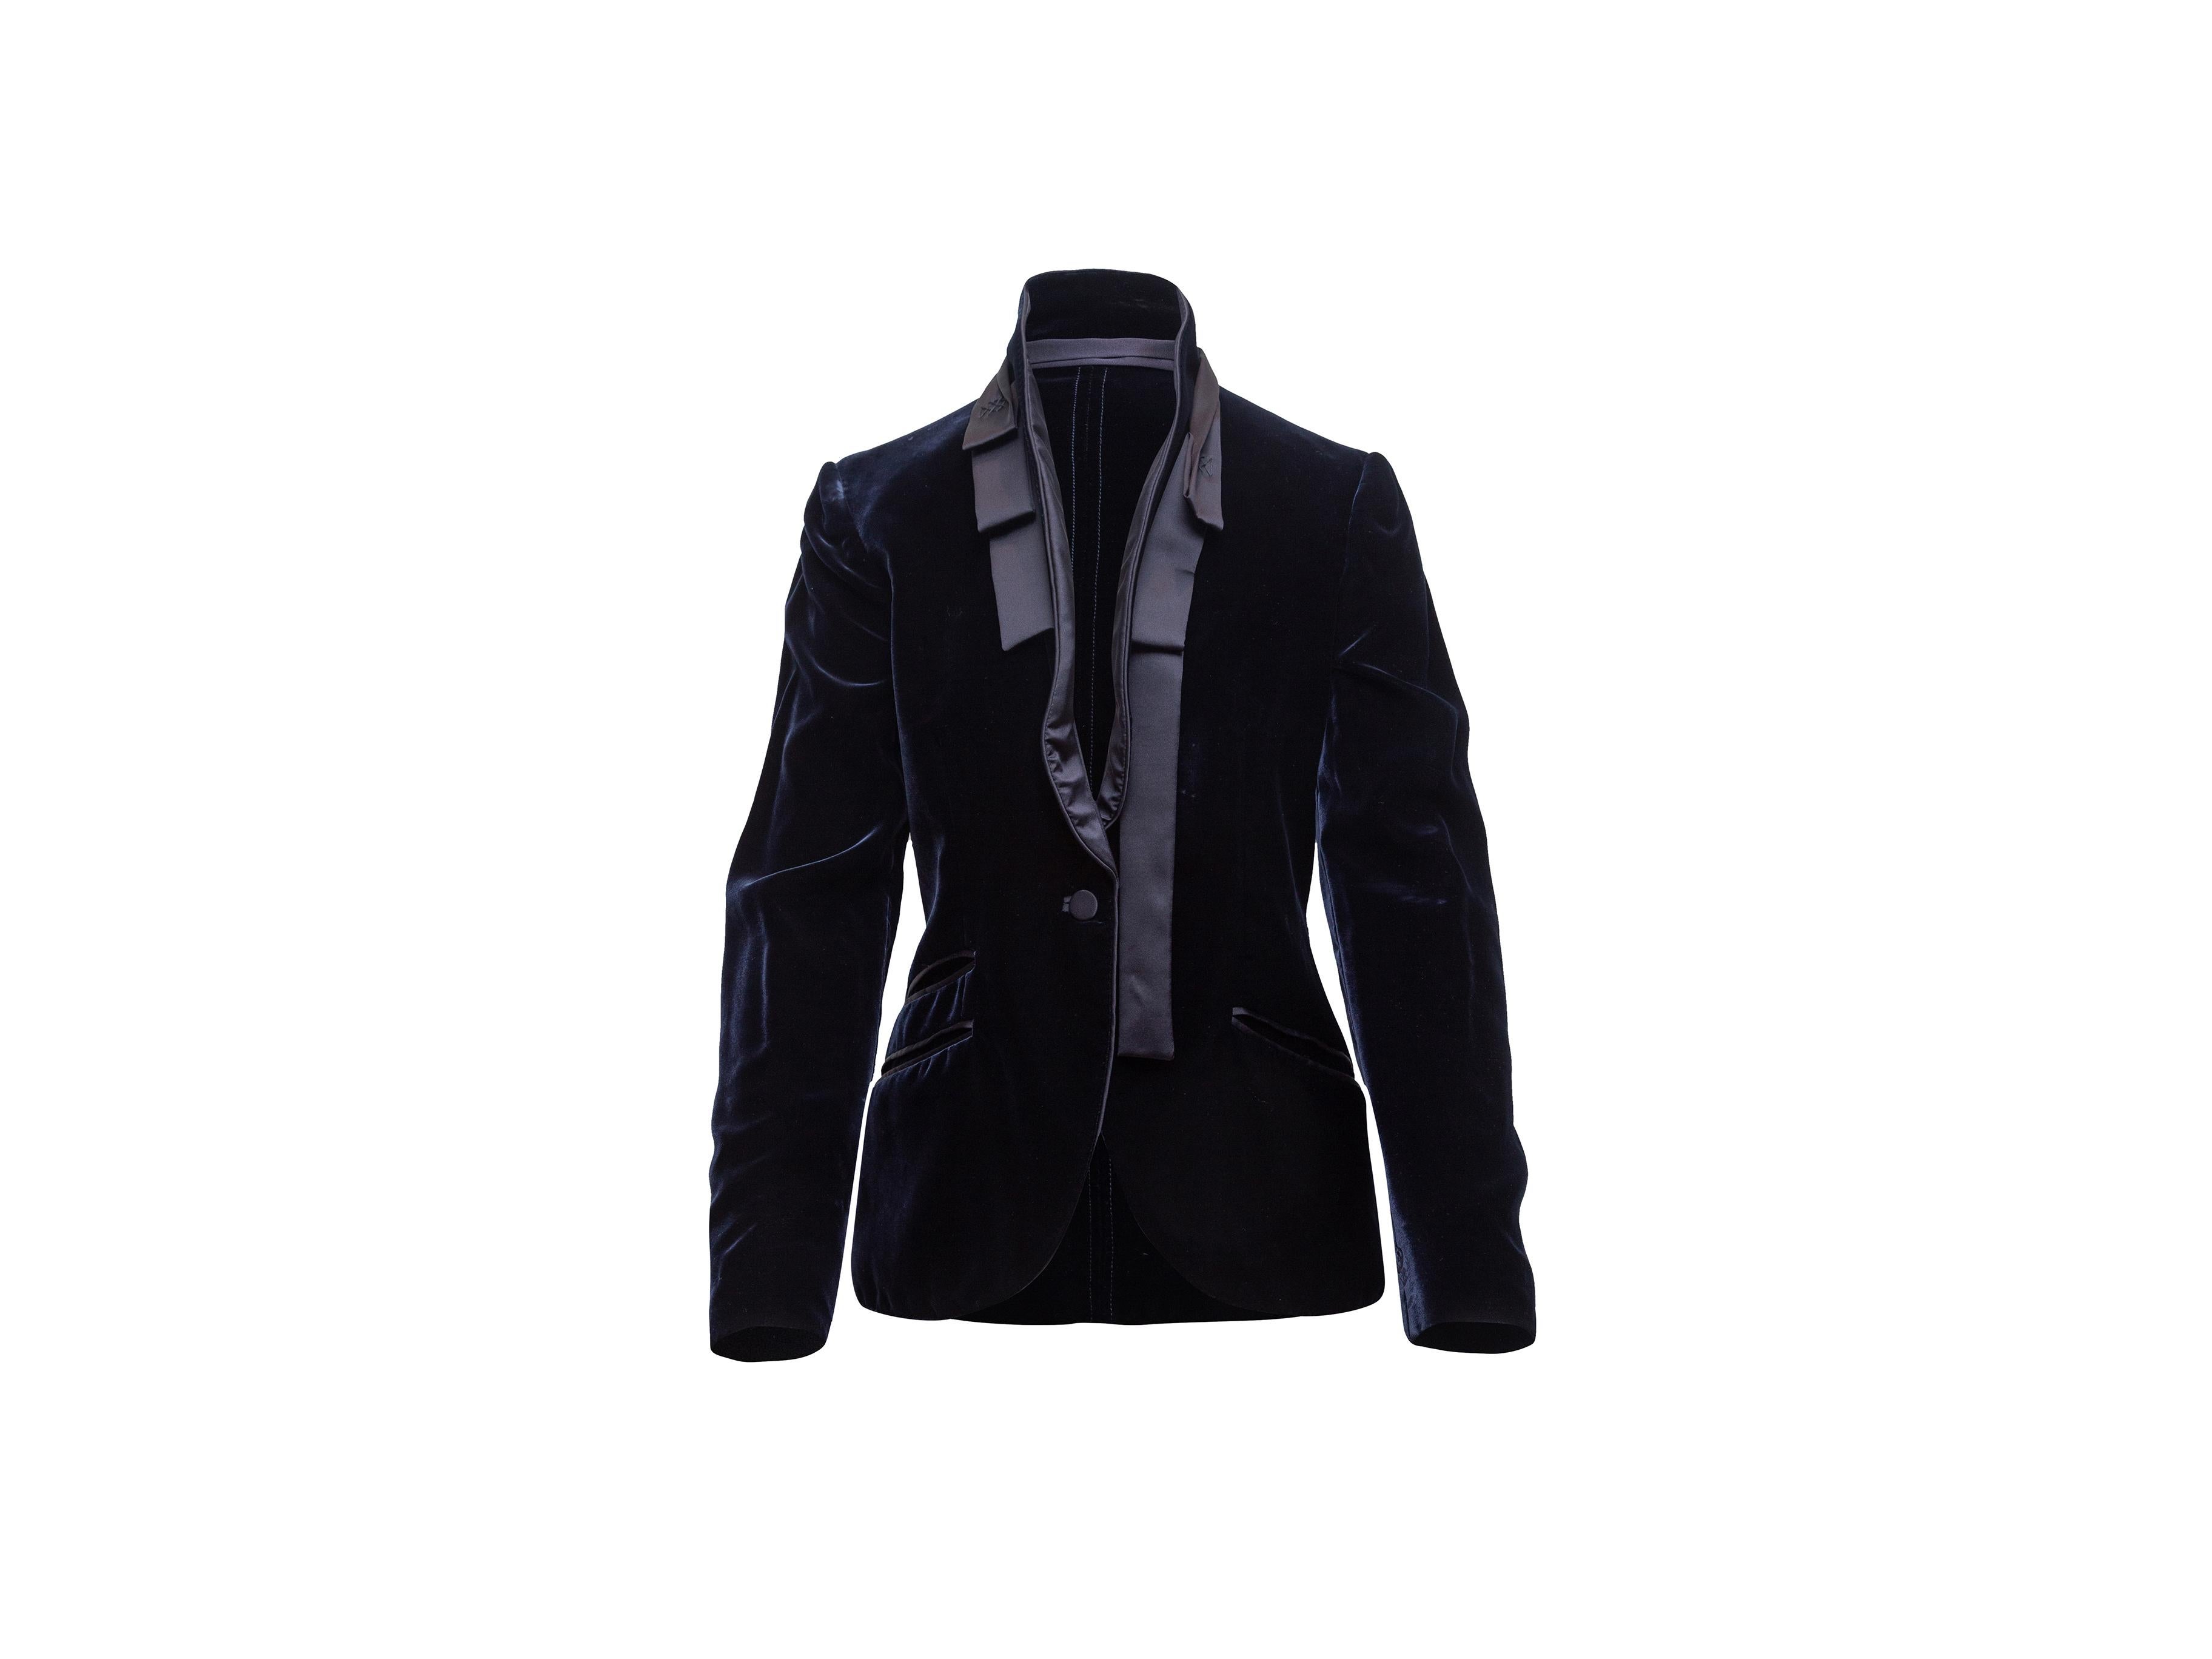 Product details: Navy velvet blazer by Gucci. Pleated silk collar. Three welt pockets at hips. Single button closure. Designer size 44. 34